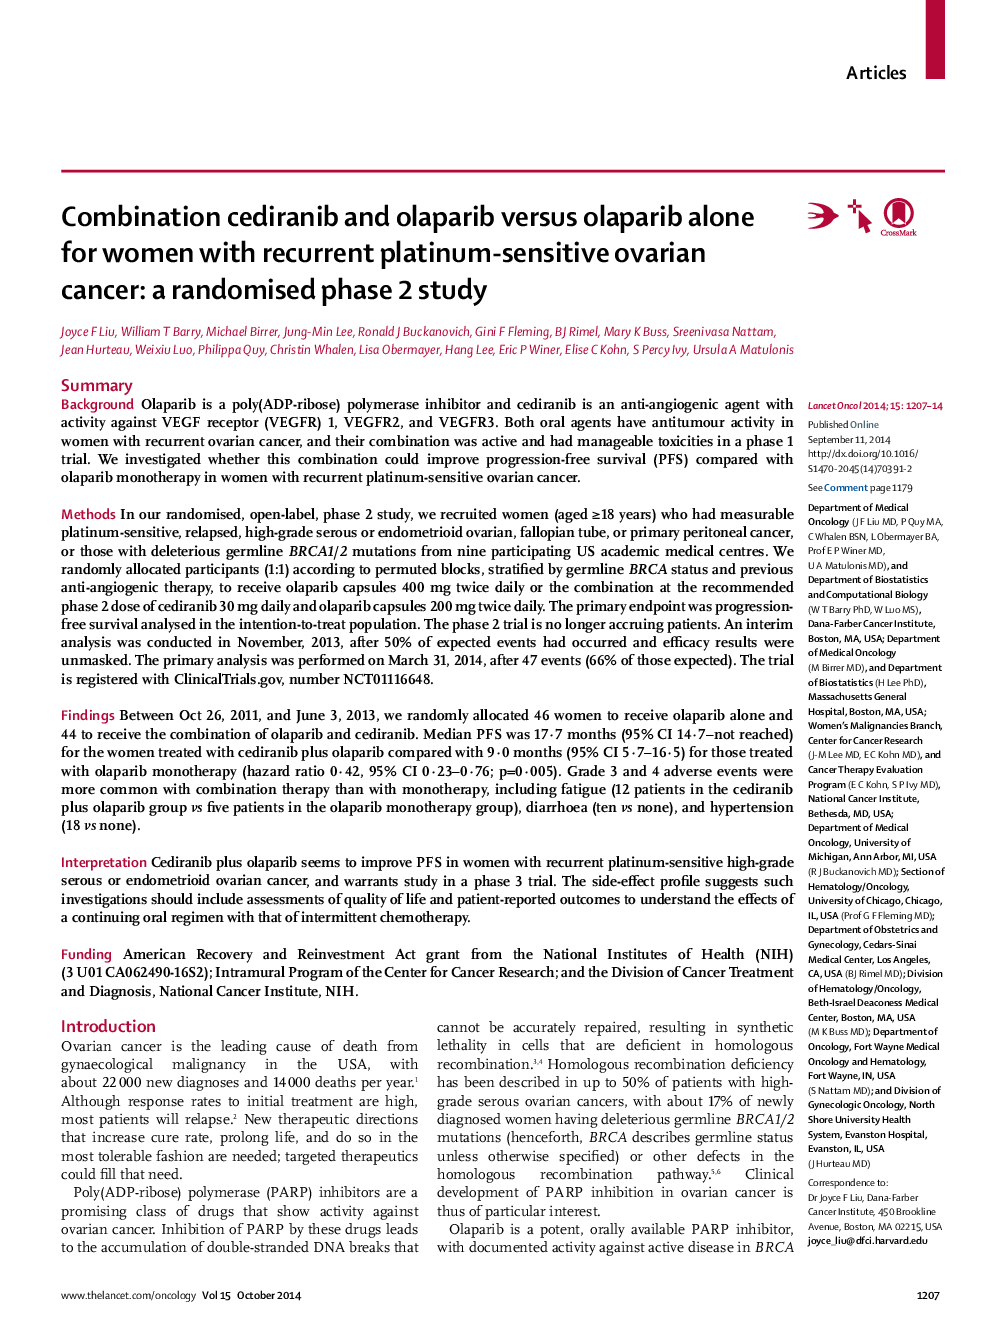 Combination cediranib and olaparib versus olaparib alone for women with recurrent platinum-sensitive ovarian cancer: a randomised phase 2 study